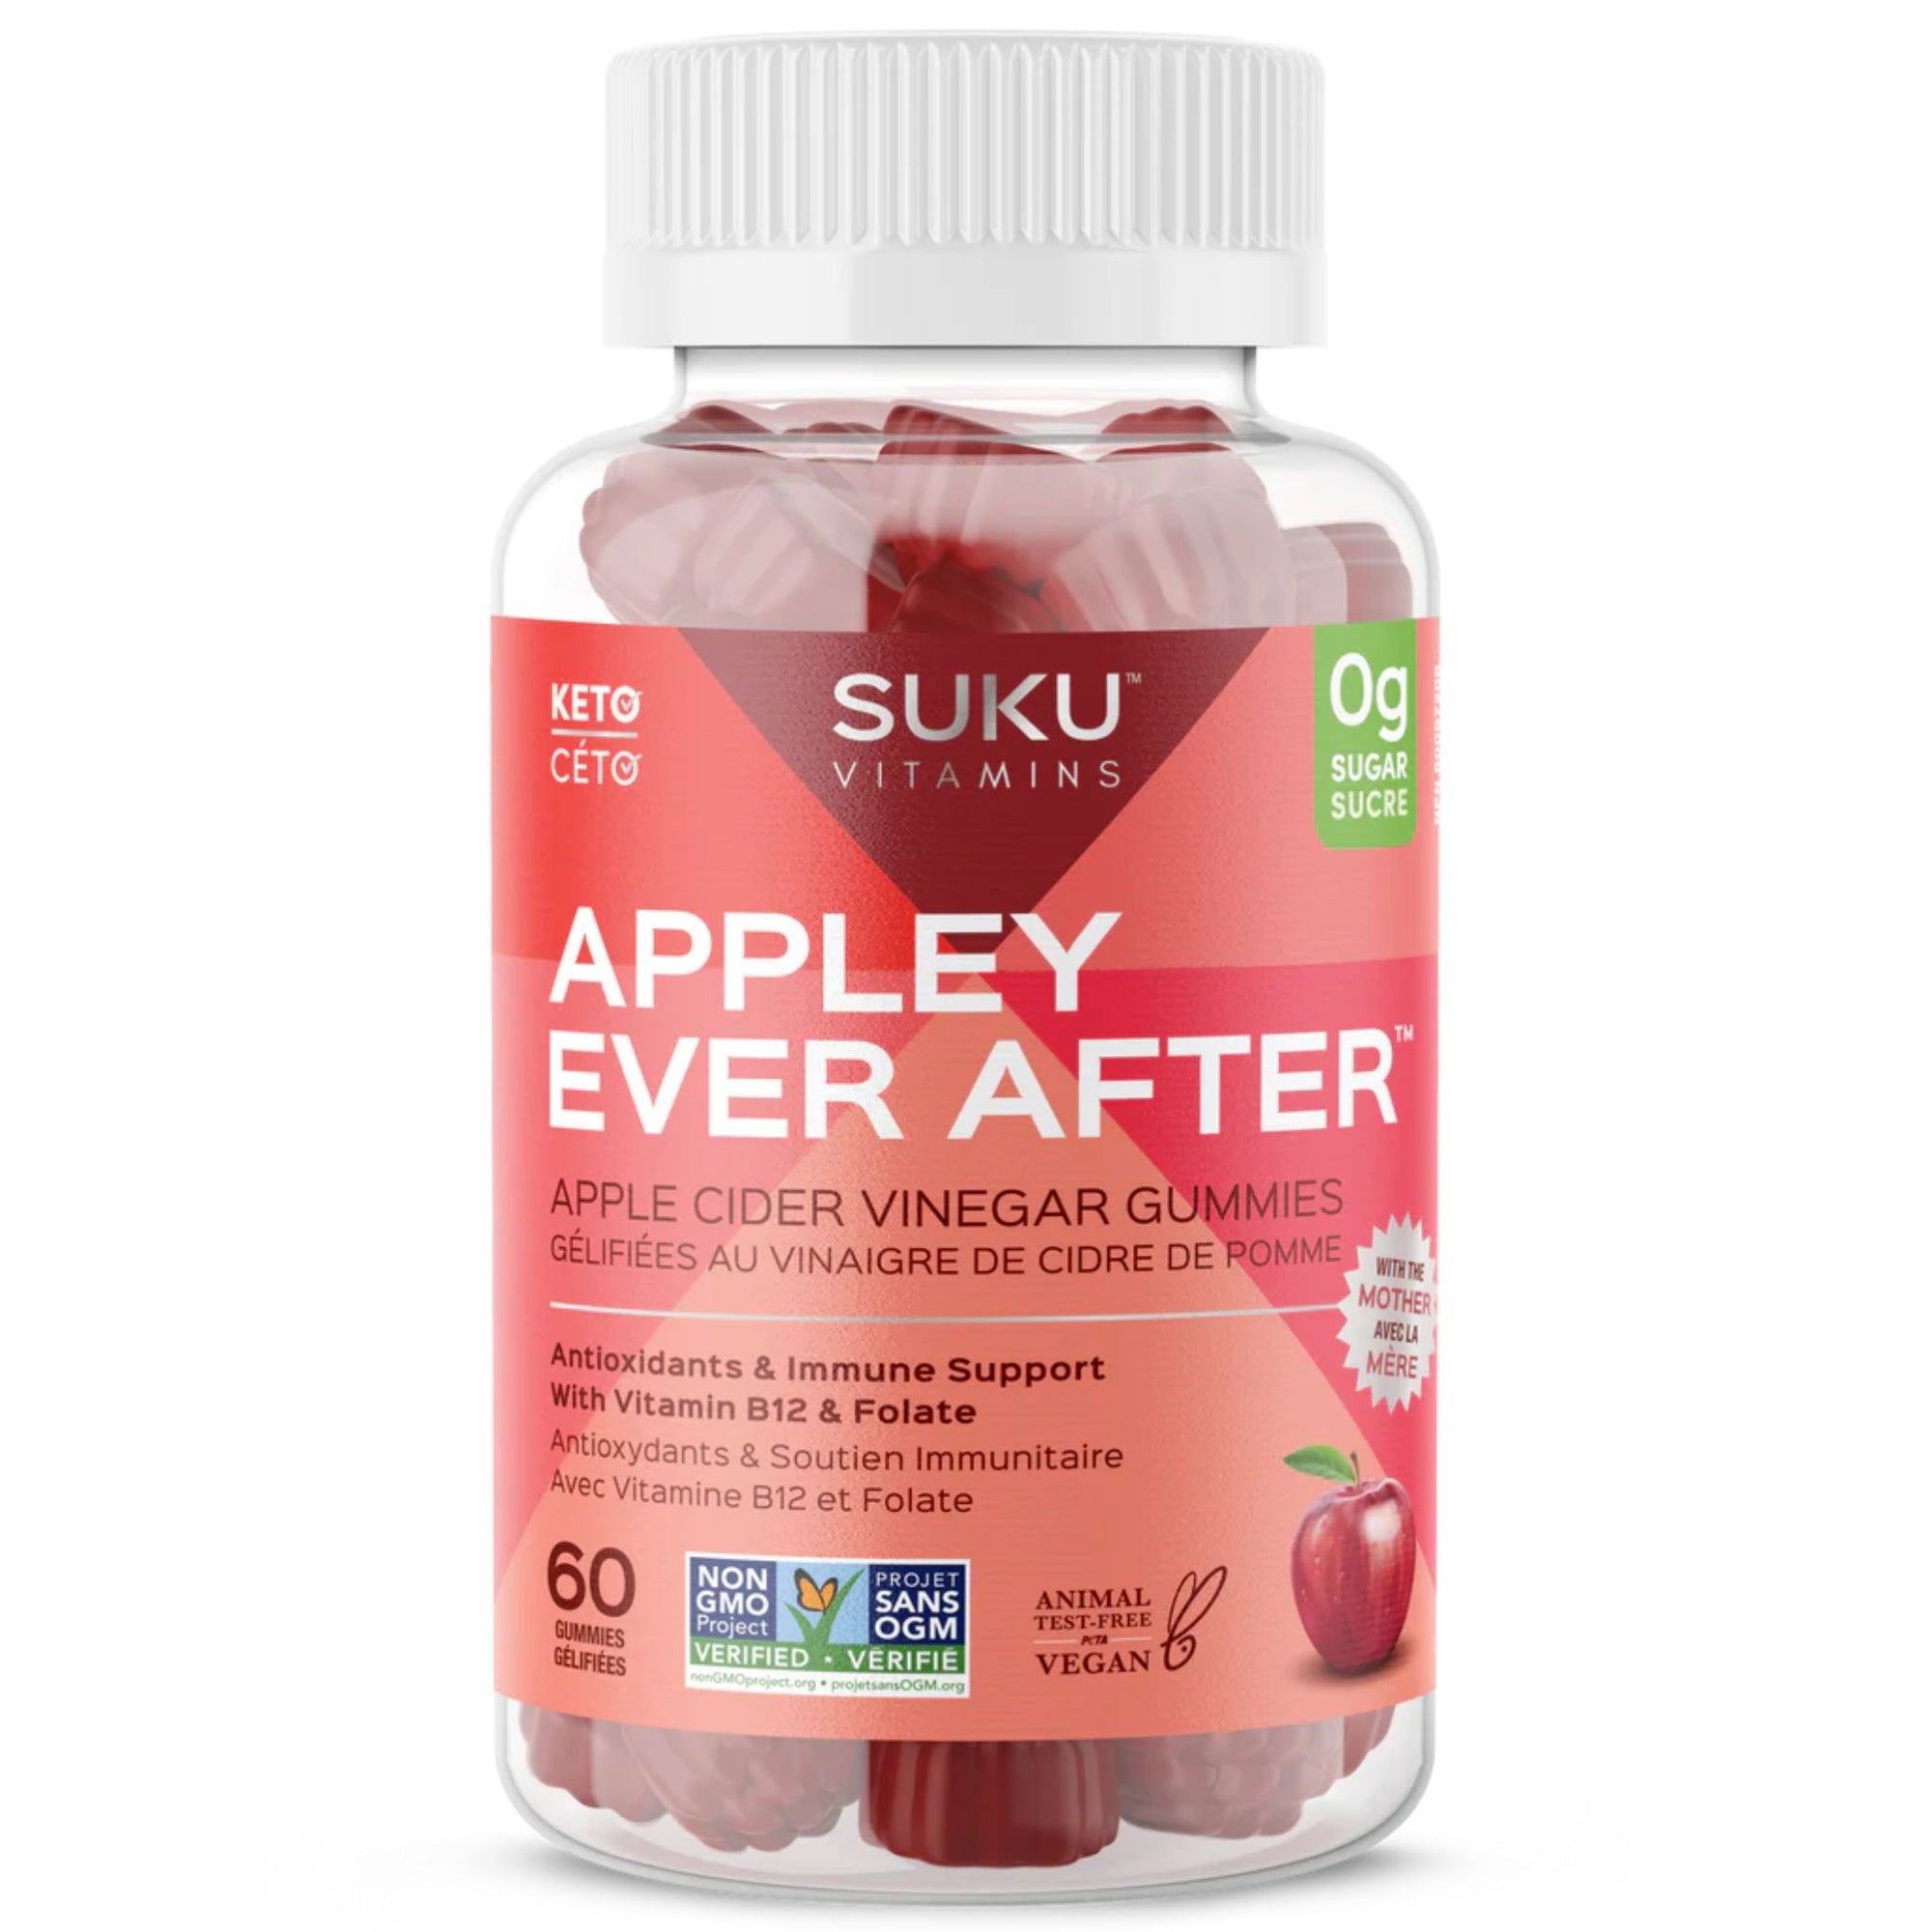 Suku Appley Ever After Apple Cider Vinegar Gummies bottle - Antioxidants & immune support. 